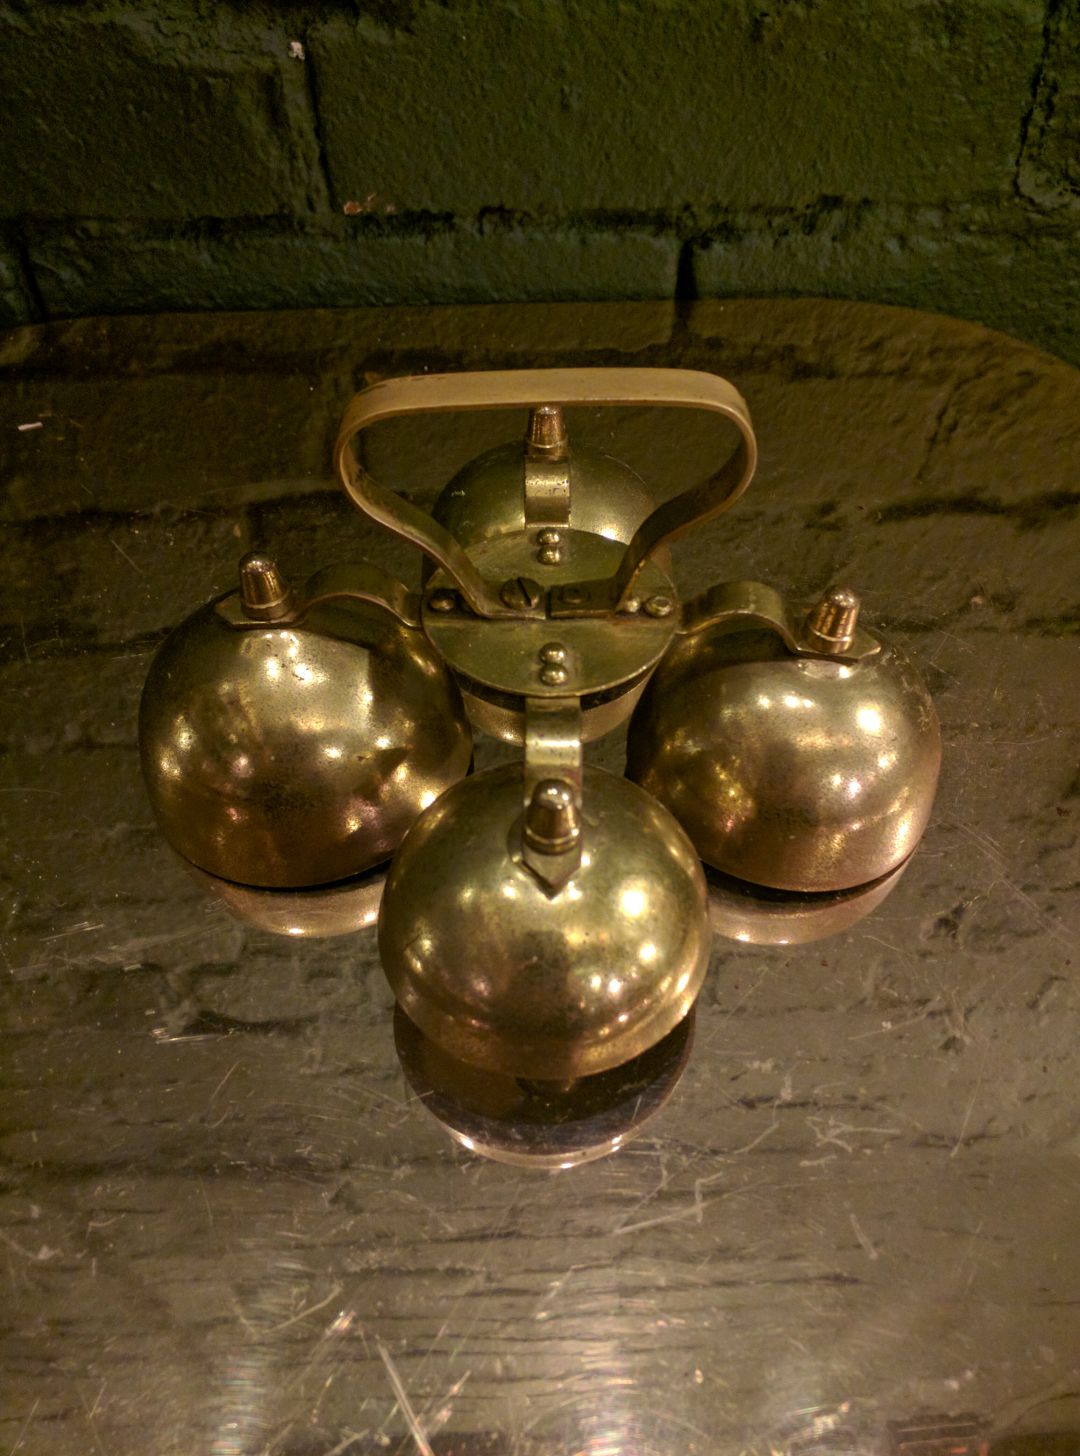 Bells - Used Church Items